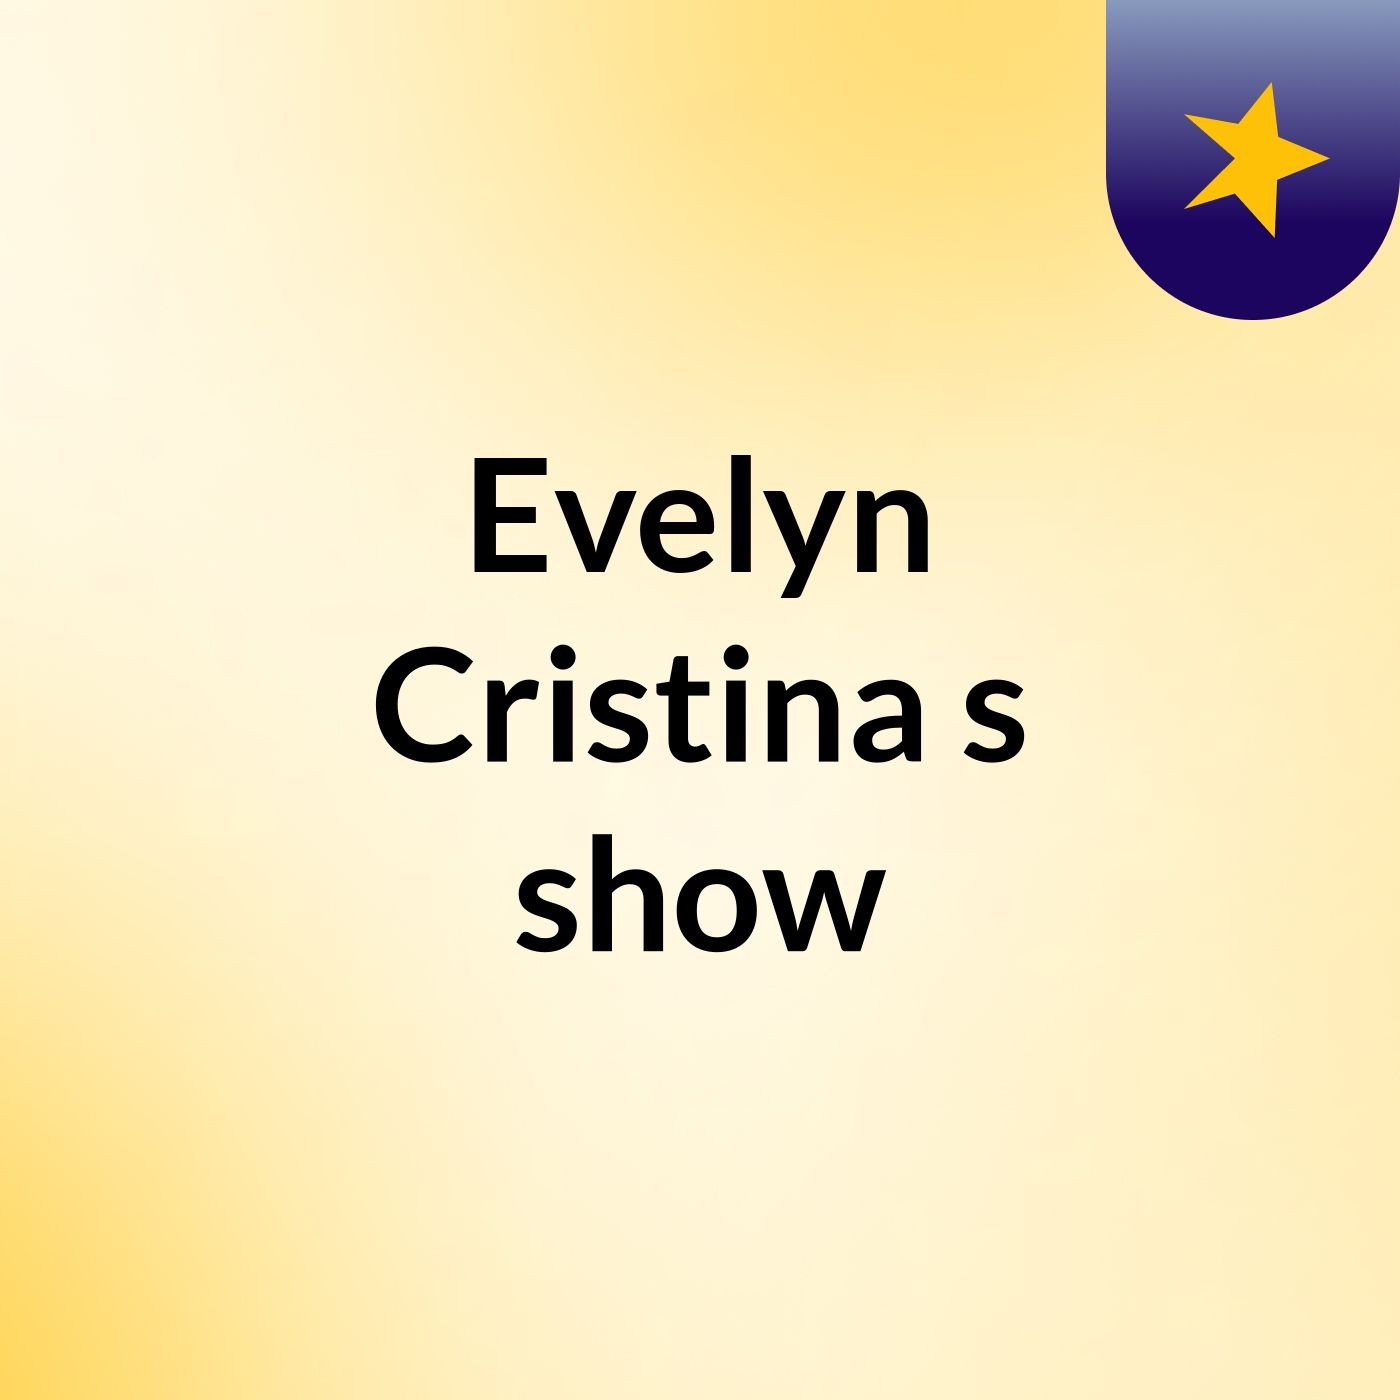 Evelyn Cristina's show